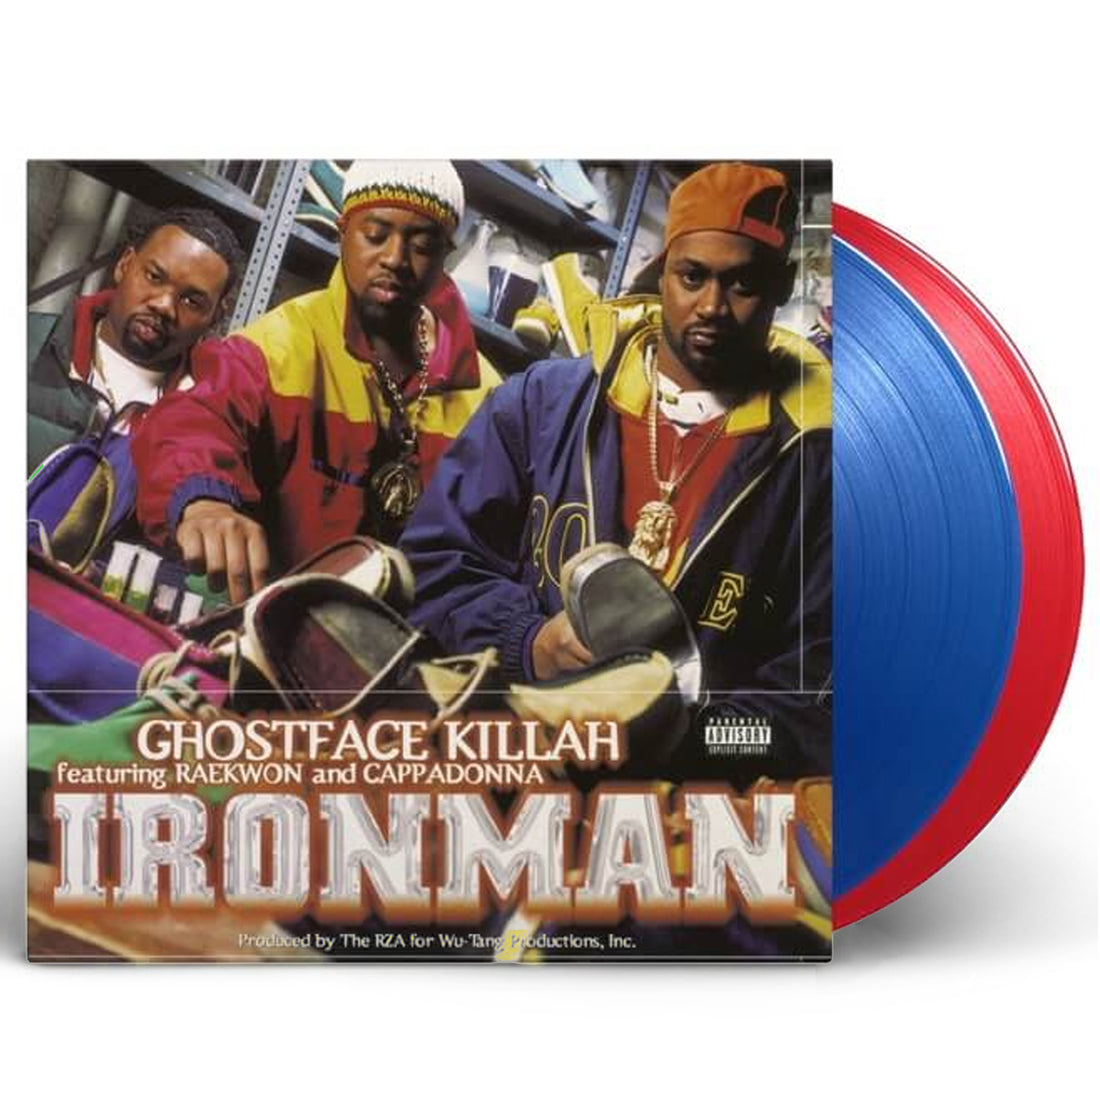 Ghostface Killah "Ironman" 2xLP Translucent Red & Blue Vinyl